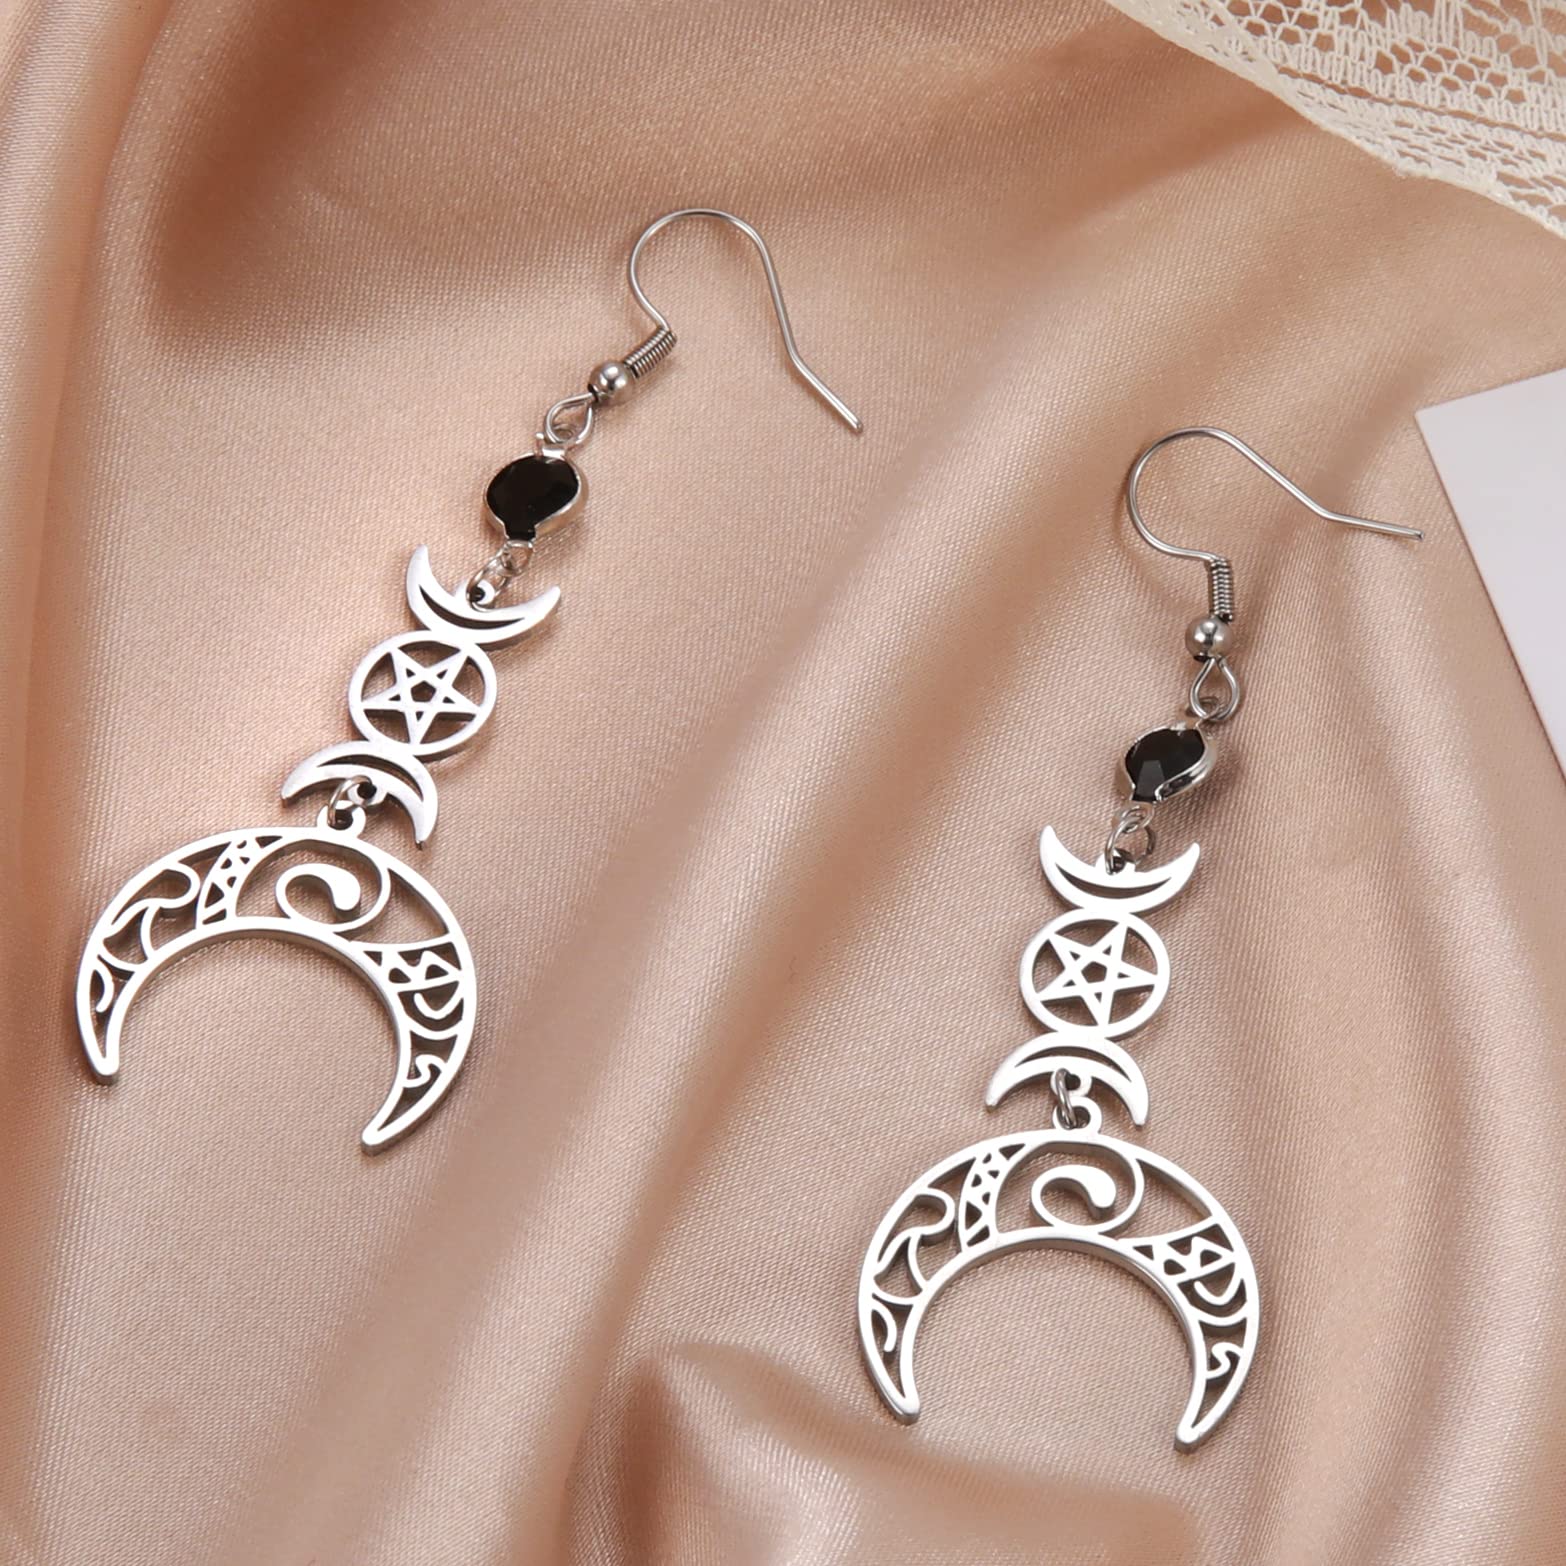 Triple Moon Goddess Pentagram Crescent Moon Pendant Earrings Amulet Wiccan Jewelry Stainless Steel Jewelry Gift Girl Woman